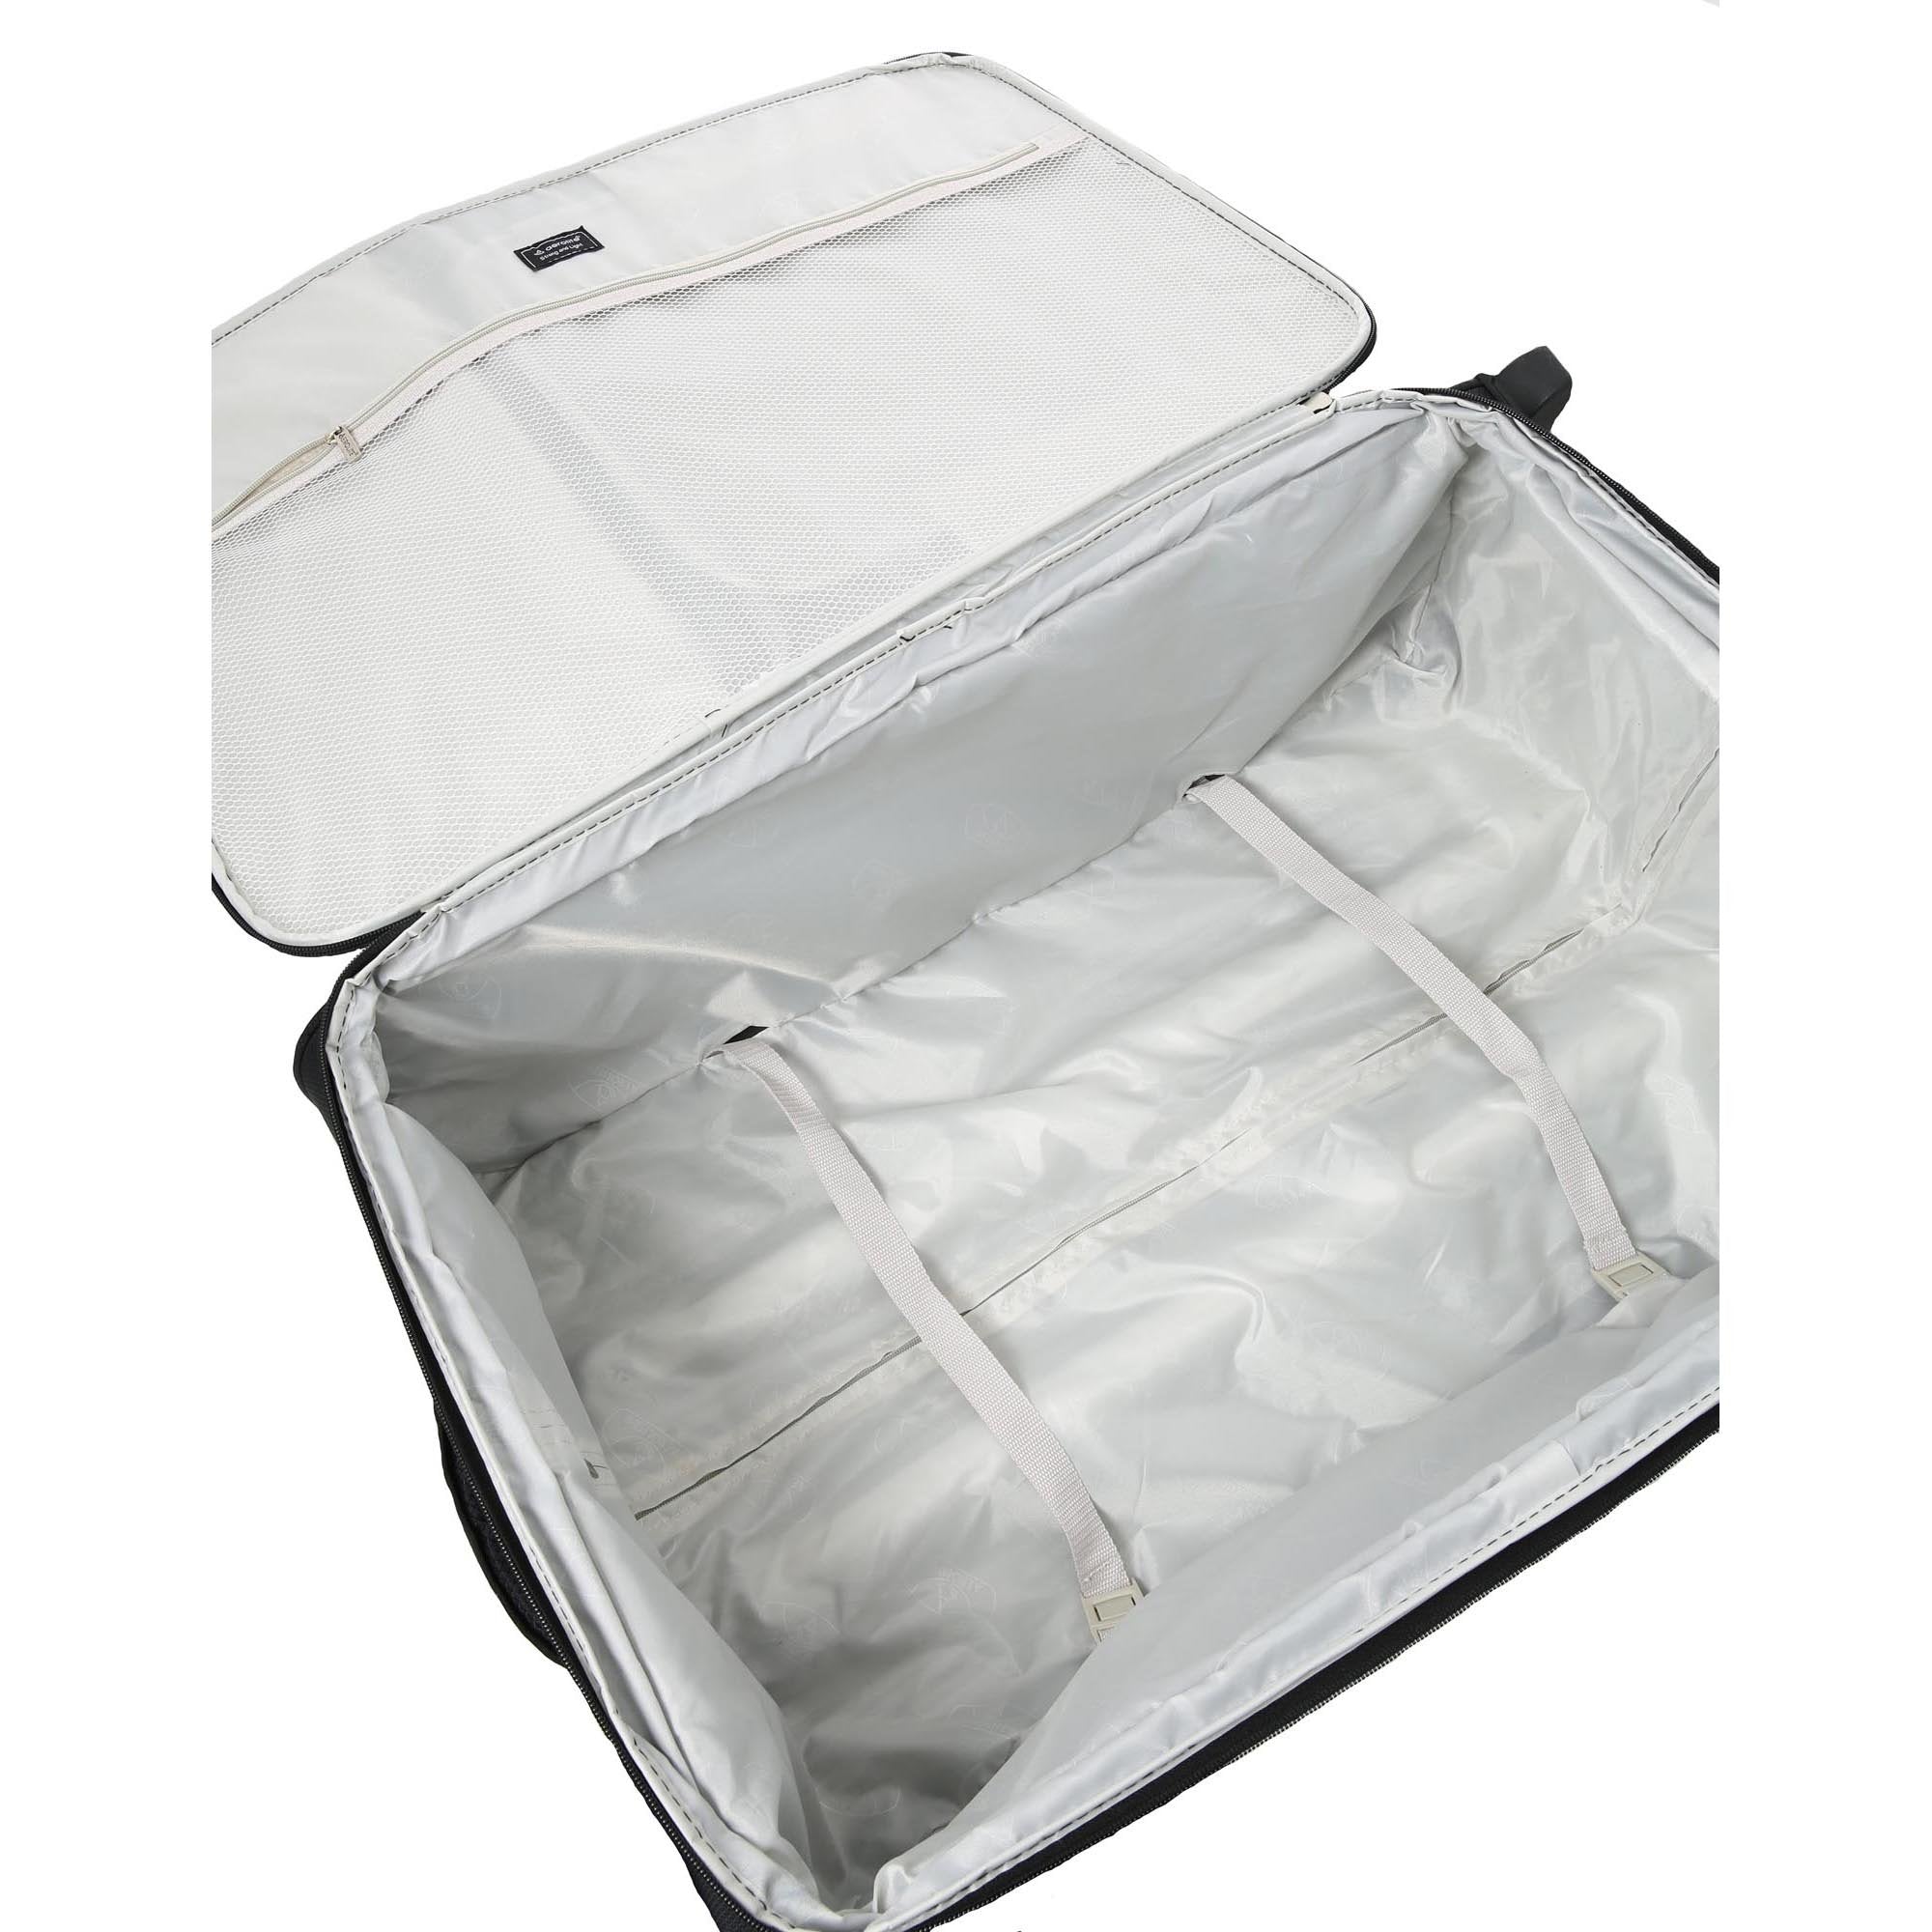 Aerolite (55x35x20cm) Lightweight Cabin Hand Luggage Black and Luggage Scales | 2 Wheels